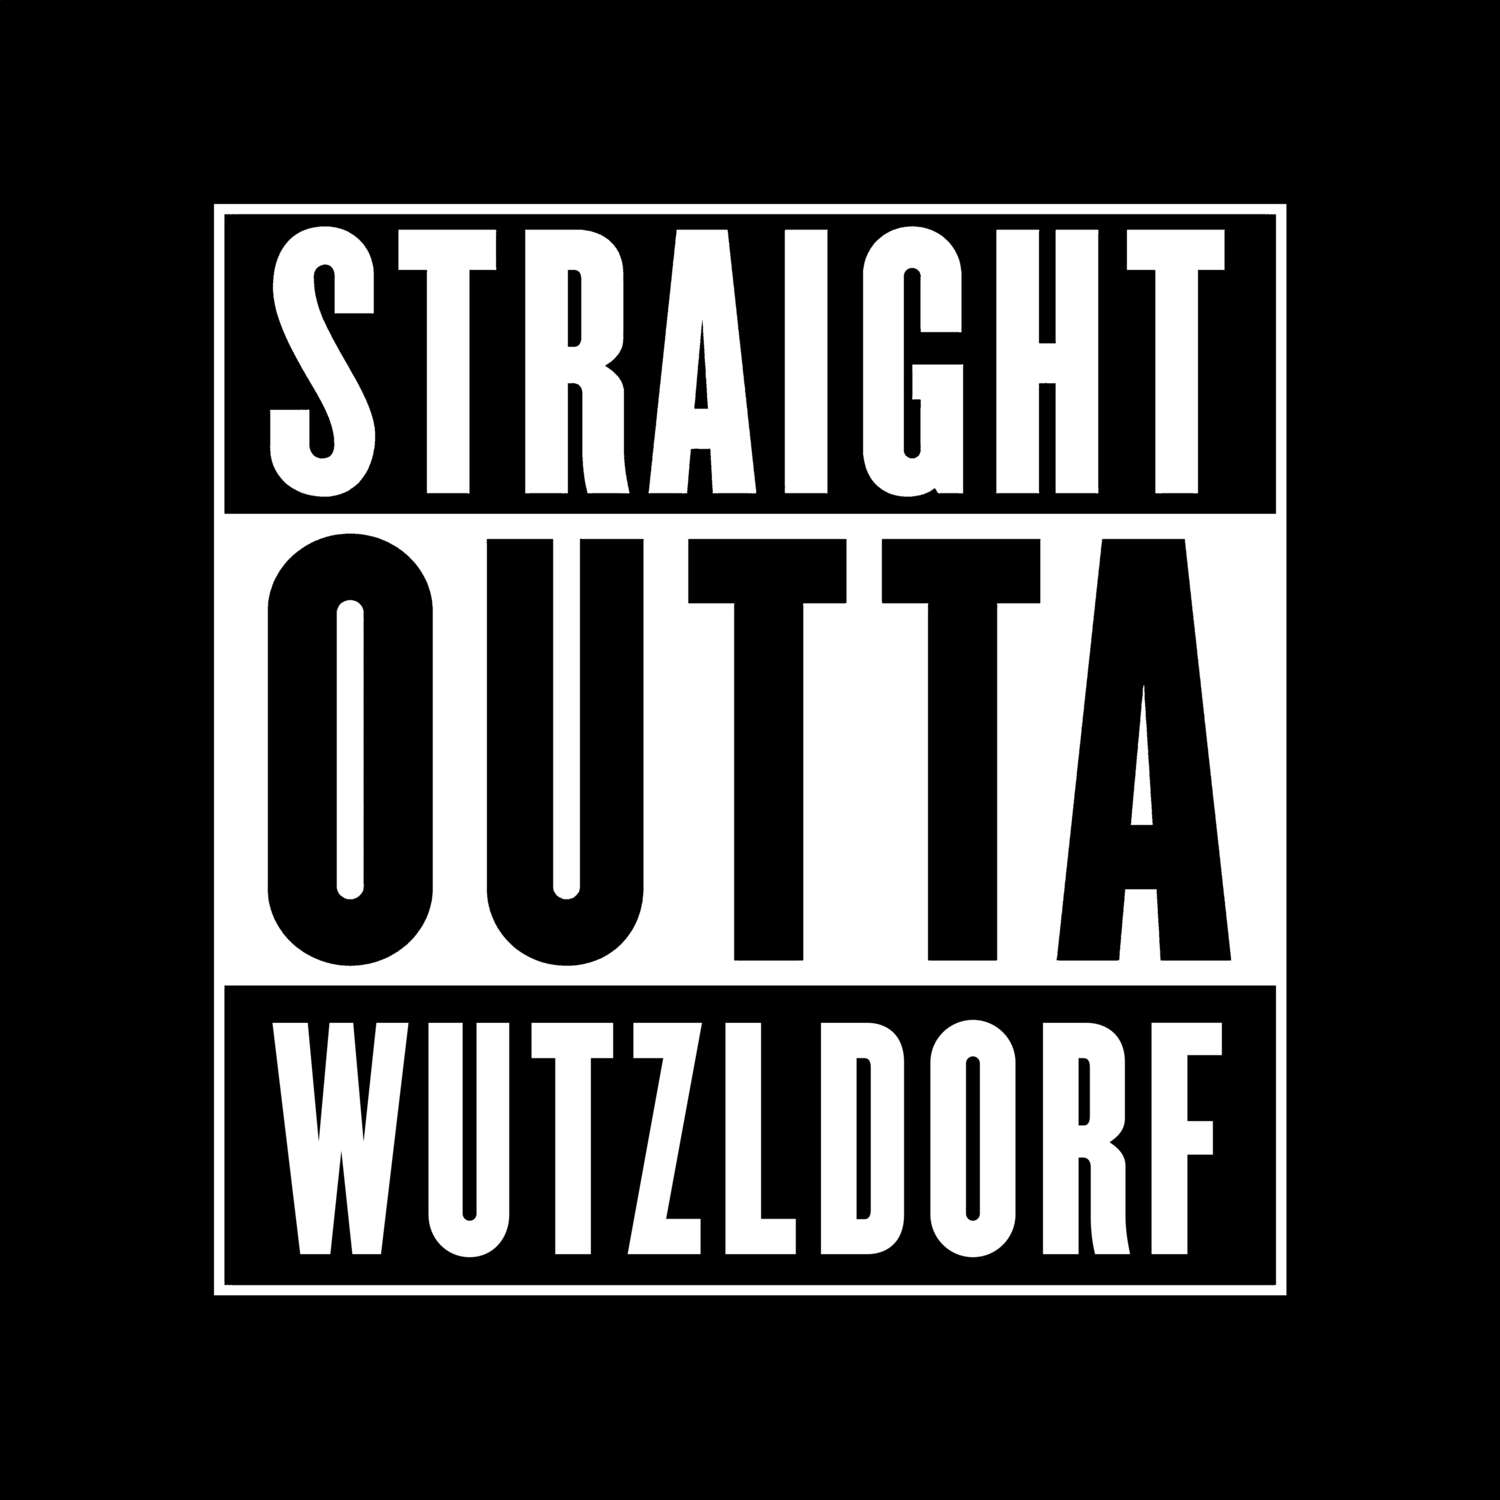 Wutzldorf T-Shirt »Straight Outta«